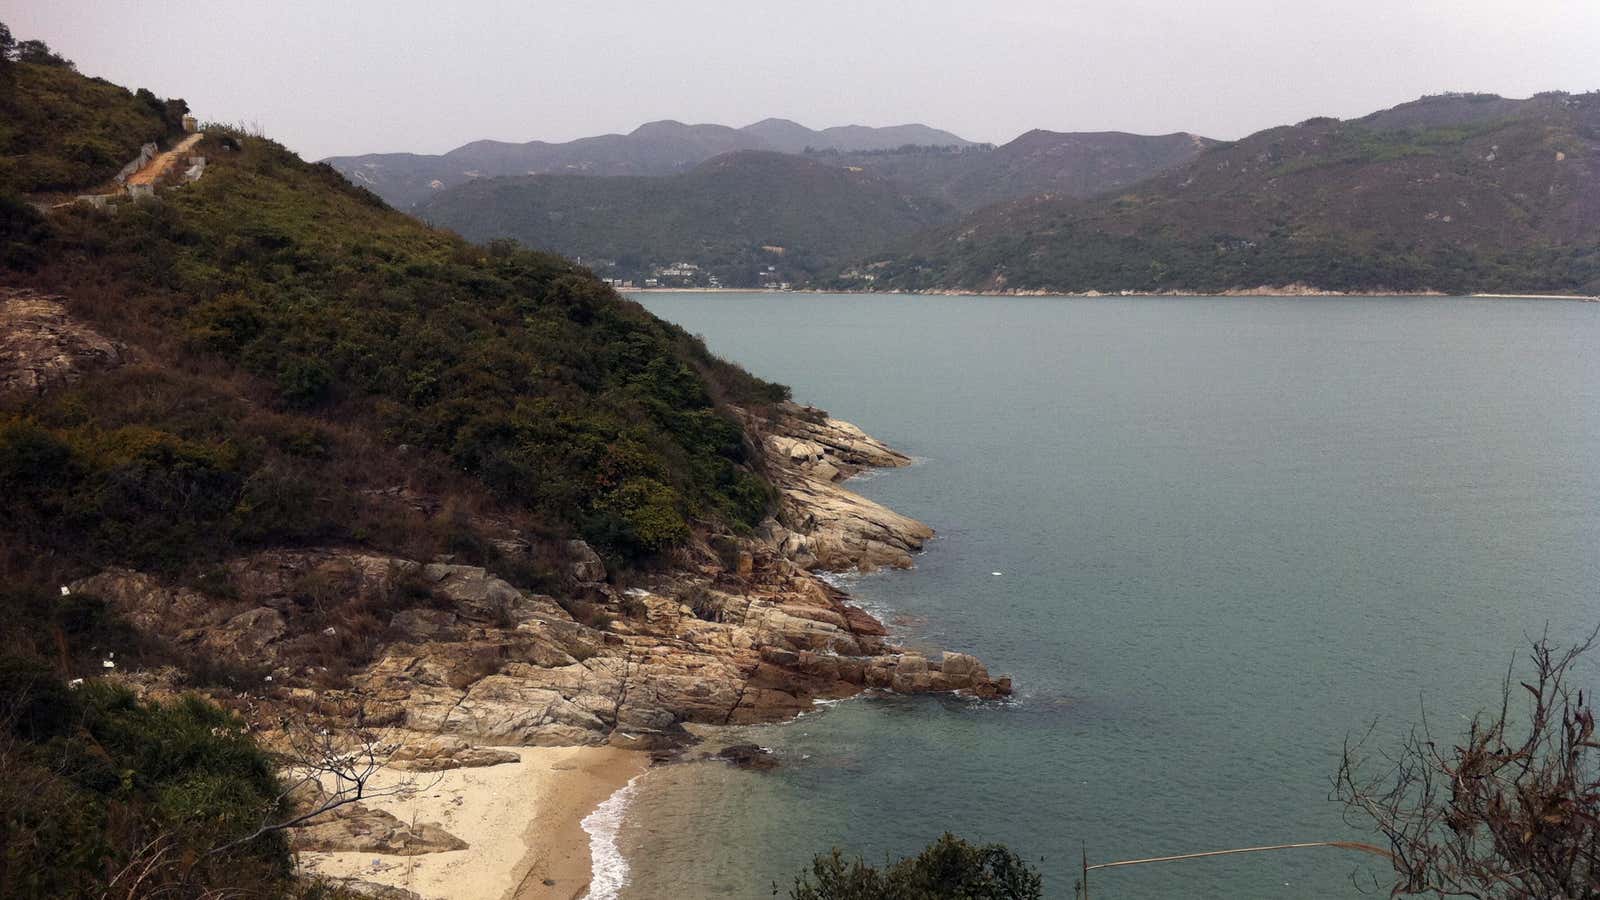 Pui O Bay on Lantau Island.